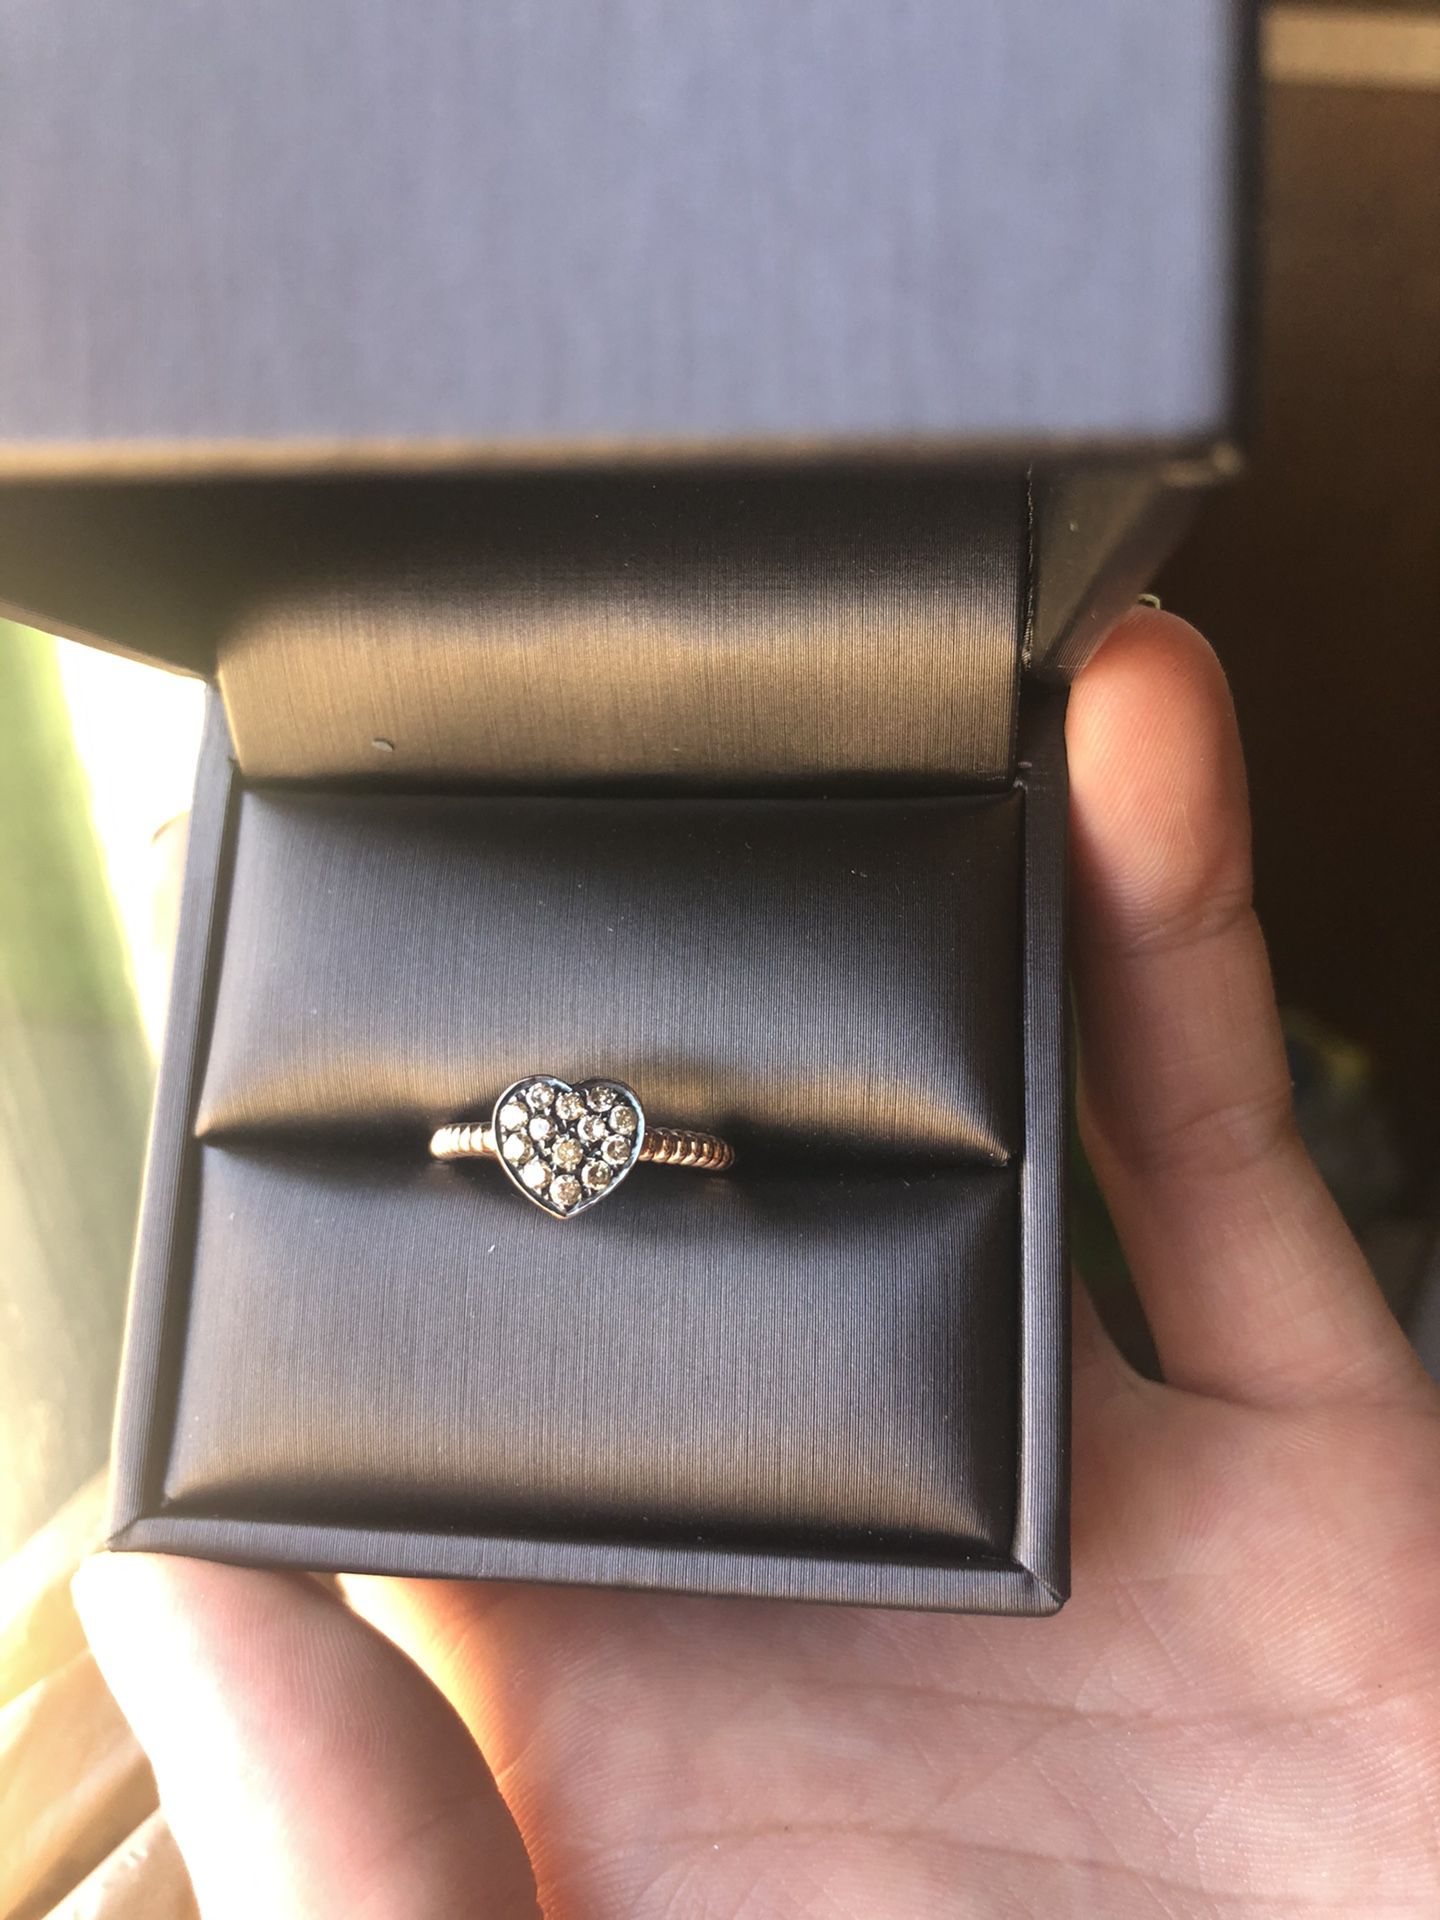 Engagement /wedding/promise rings